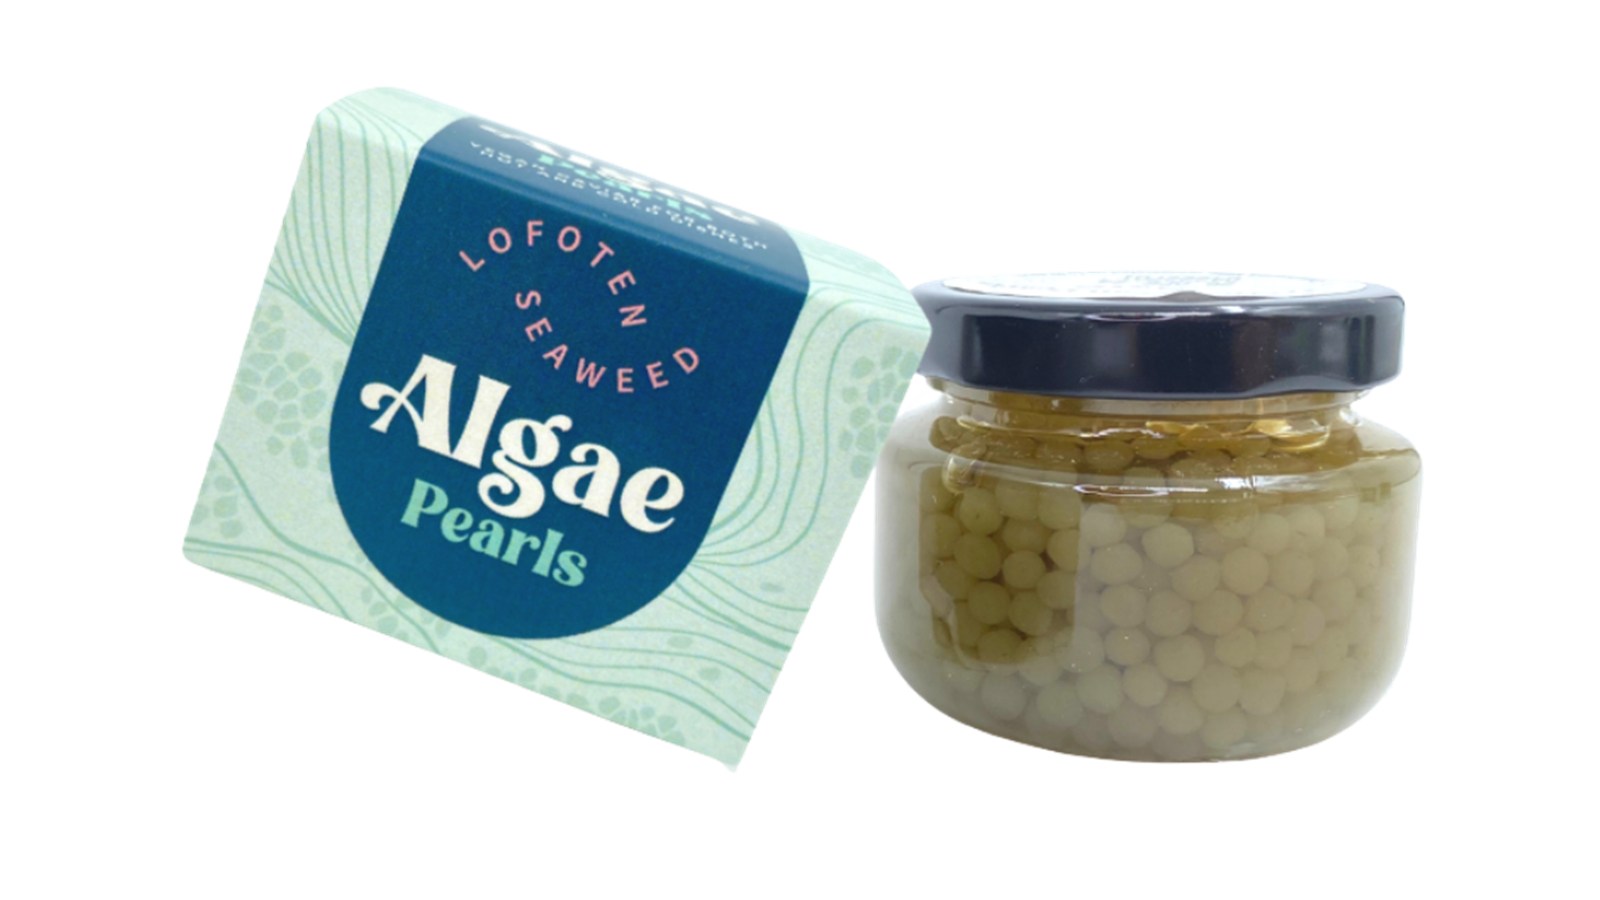 Algae Pearls